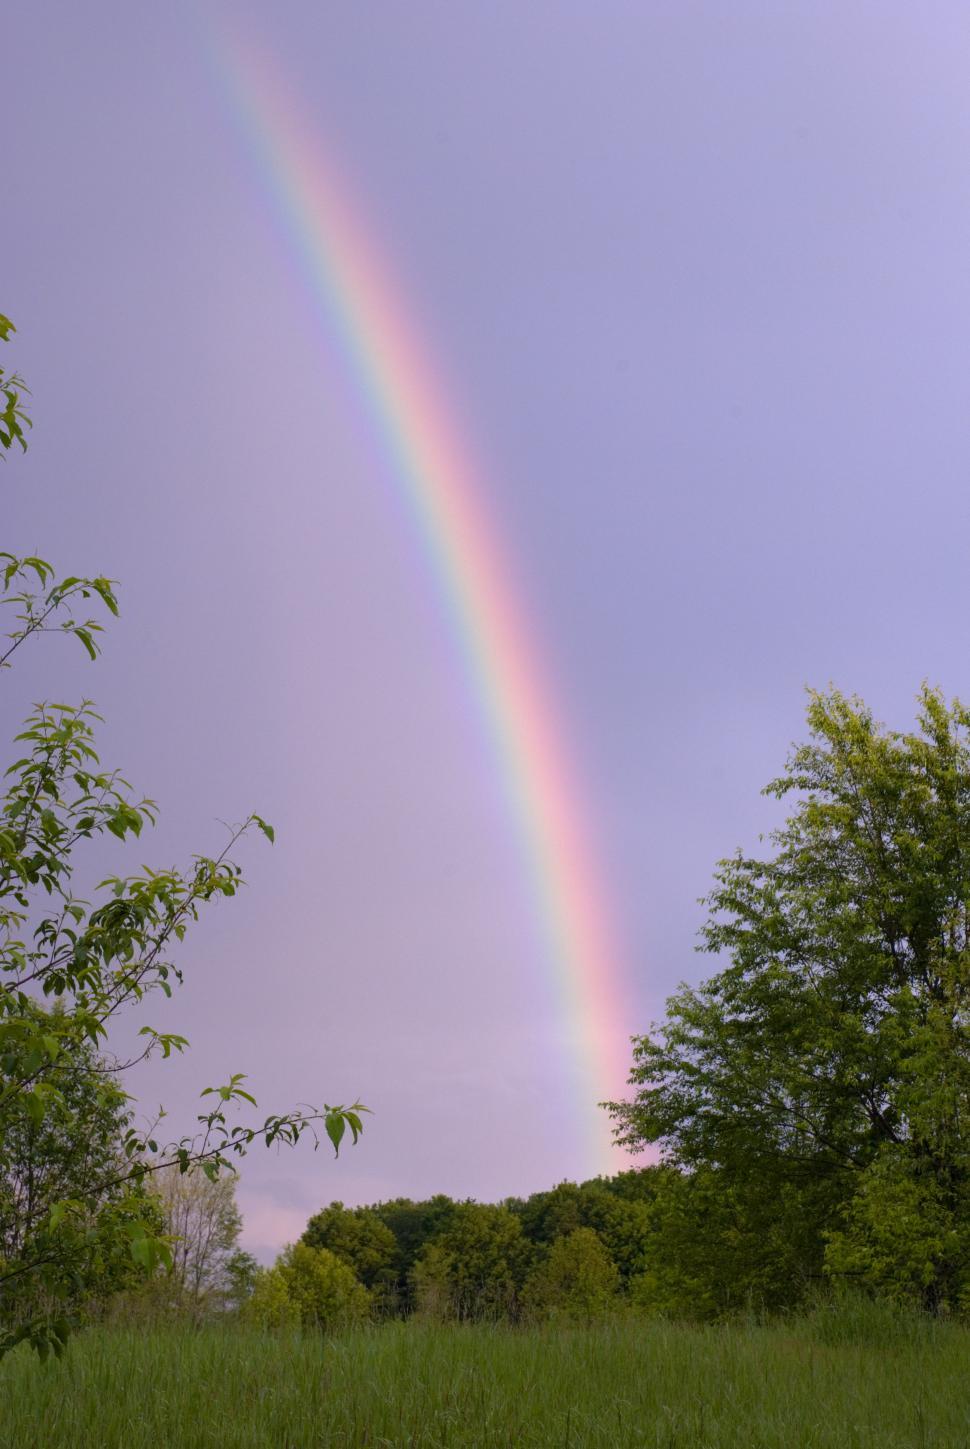 Free Image of Rainbow Over Field 